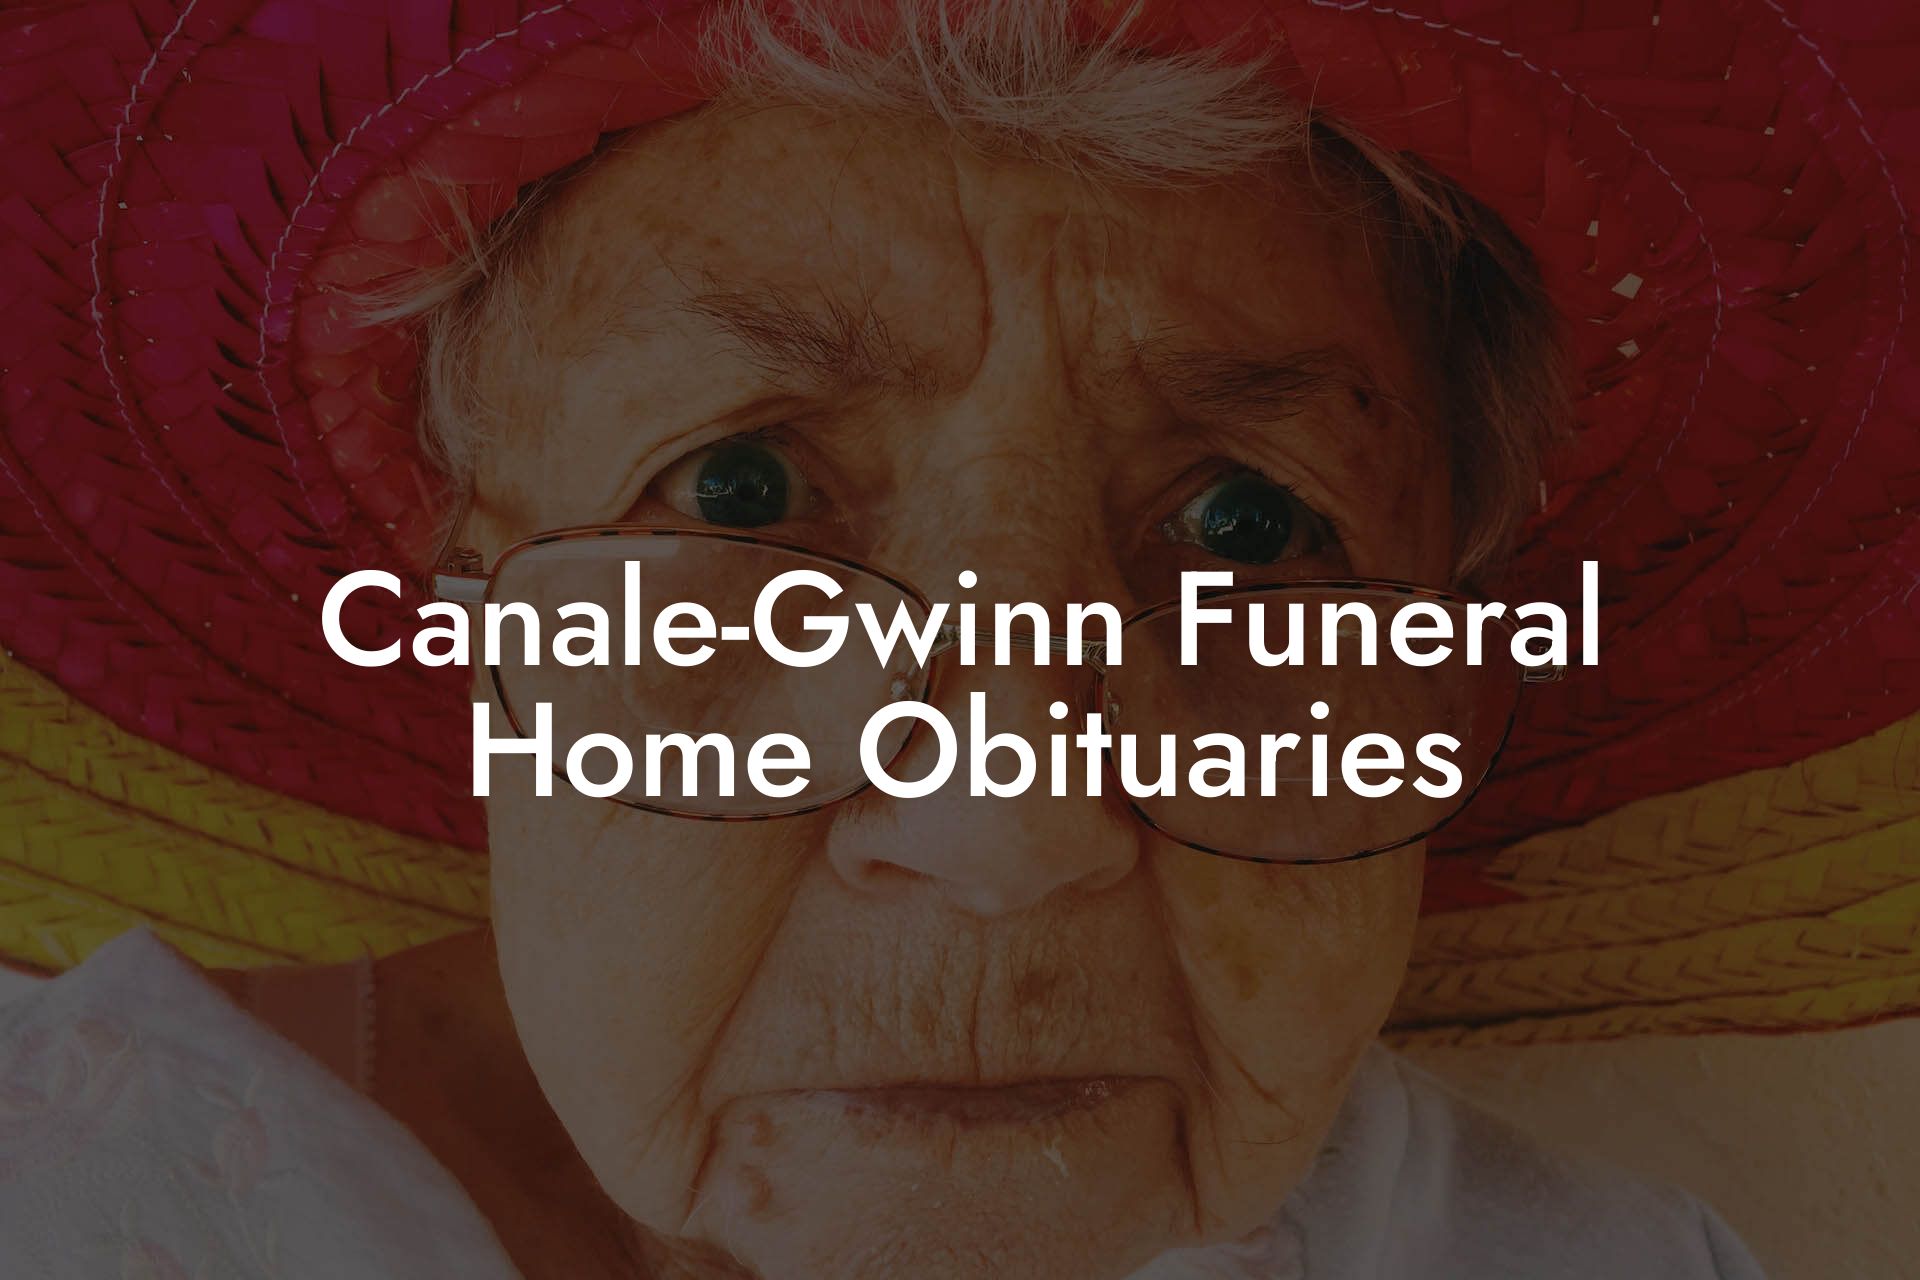 Canale-Gwinn Funeral Home Obituaries